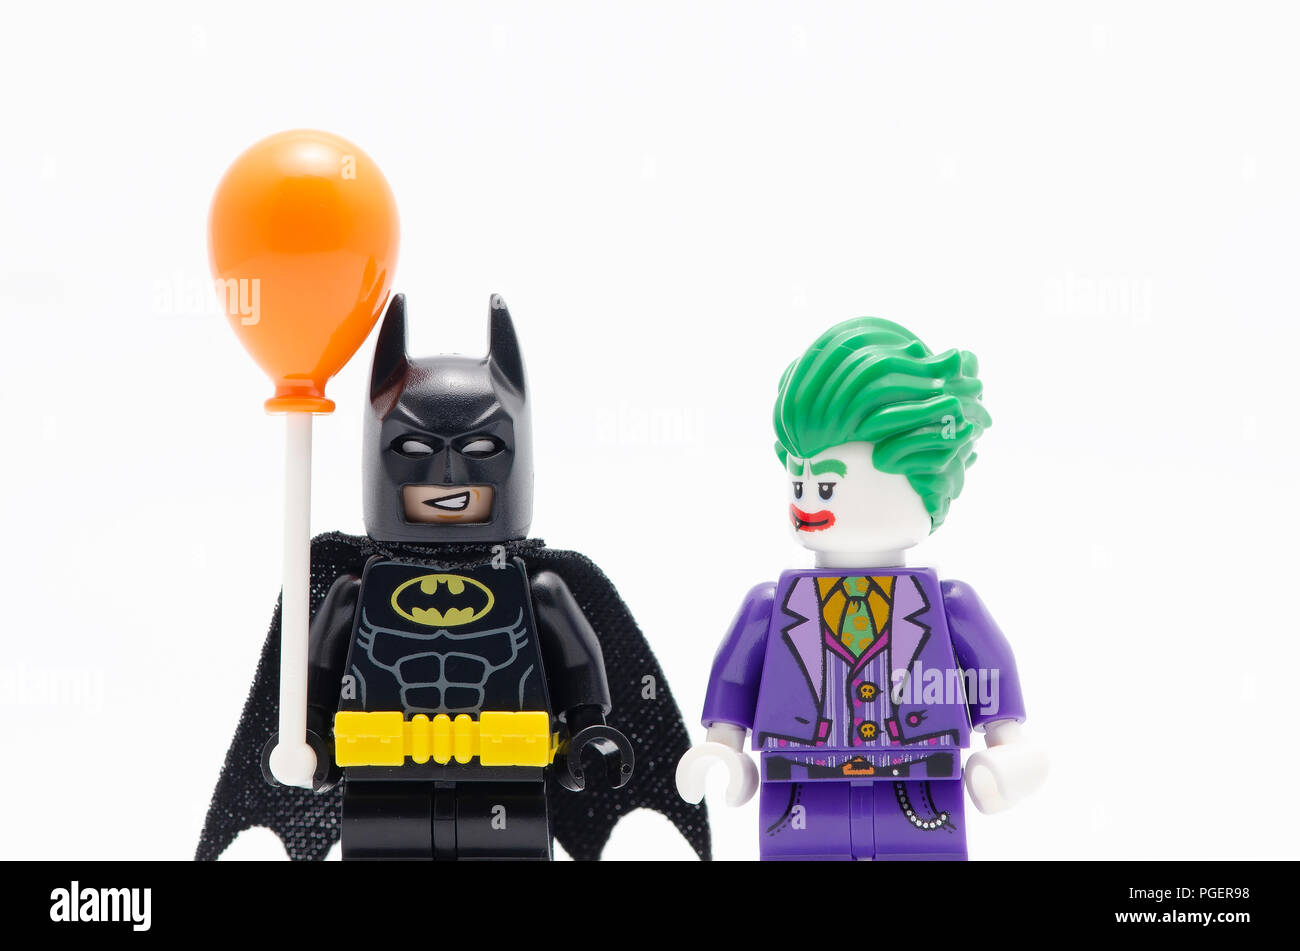 Lego batman Cut Out Stock Images & Pictures - Alamy